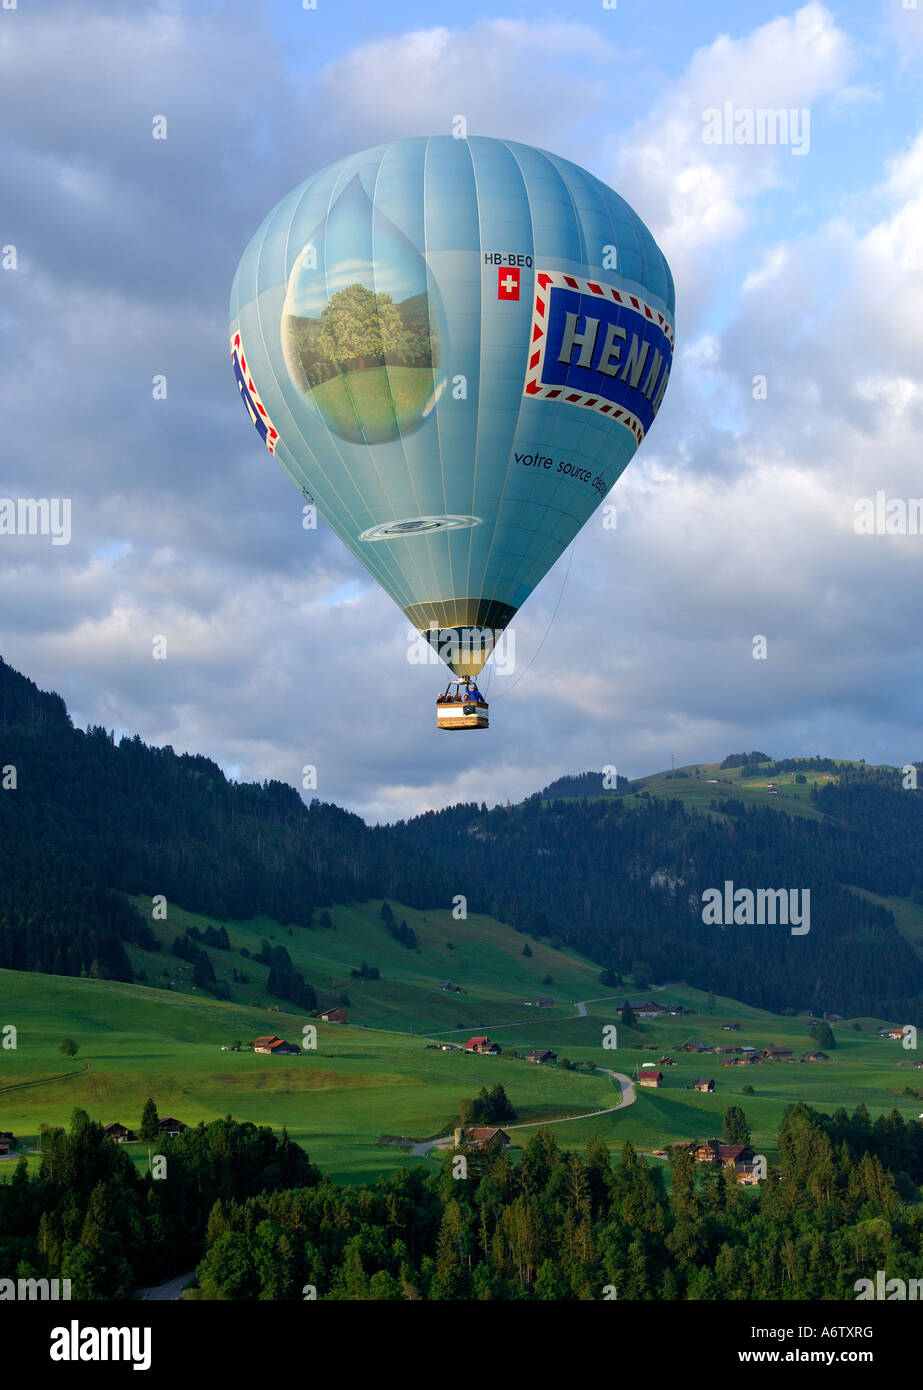 Heißluft-Ballon Fahrt, Chateau-d ' Oex, Schweiz Stockfotografie - Alamy